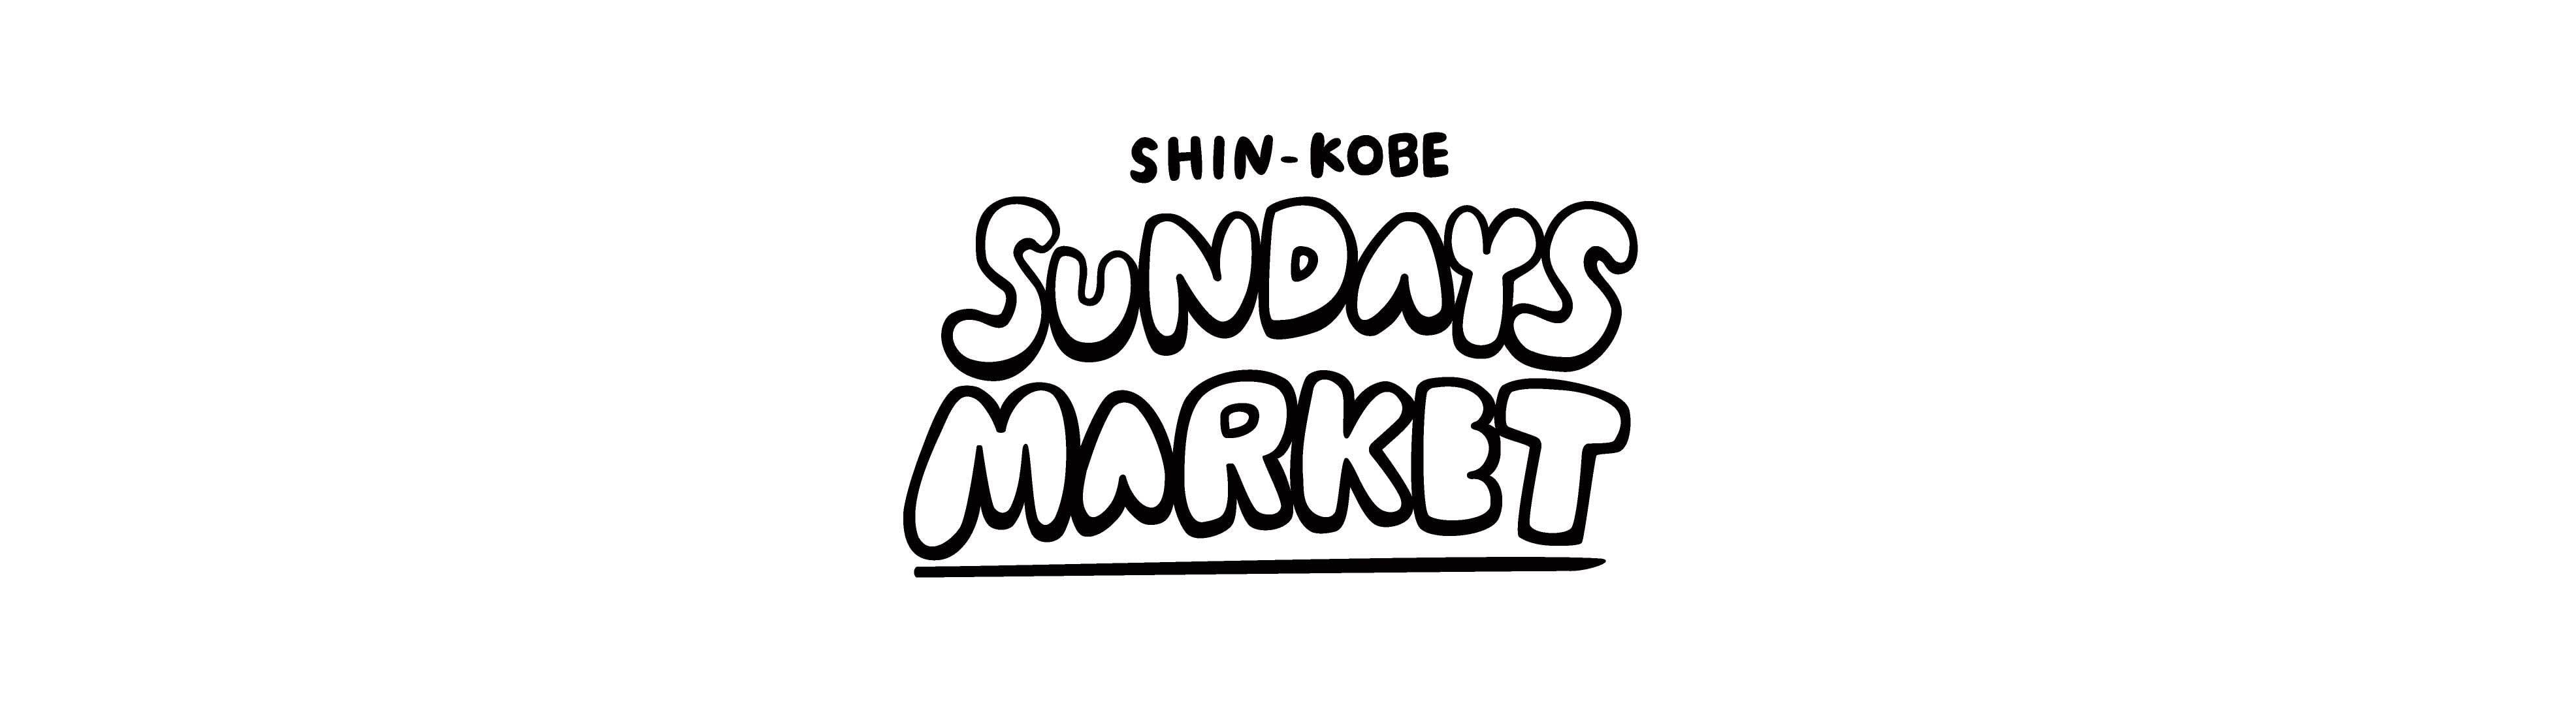 SHIN-KOBE SUNDAYS MARKET